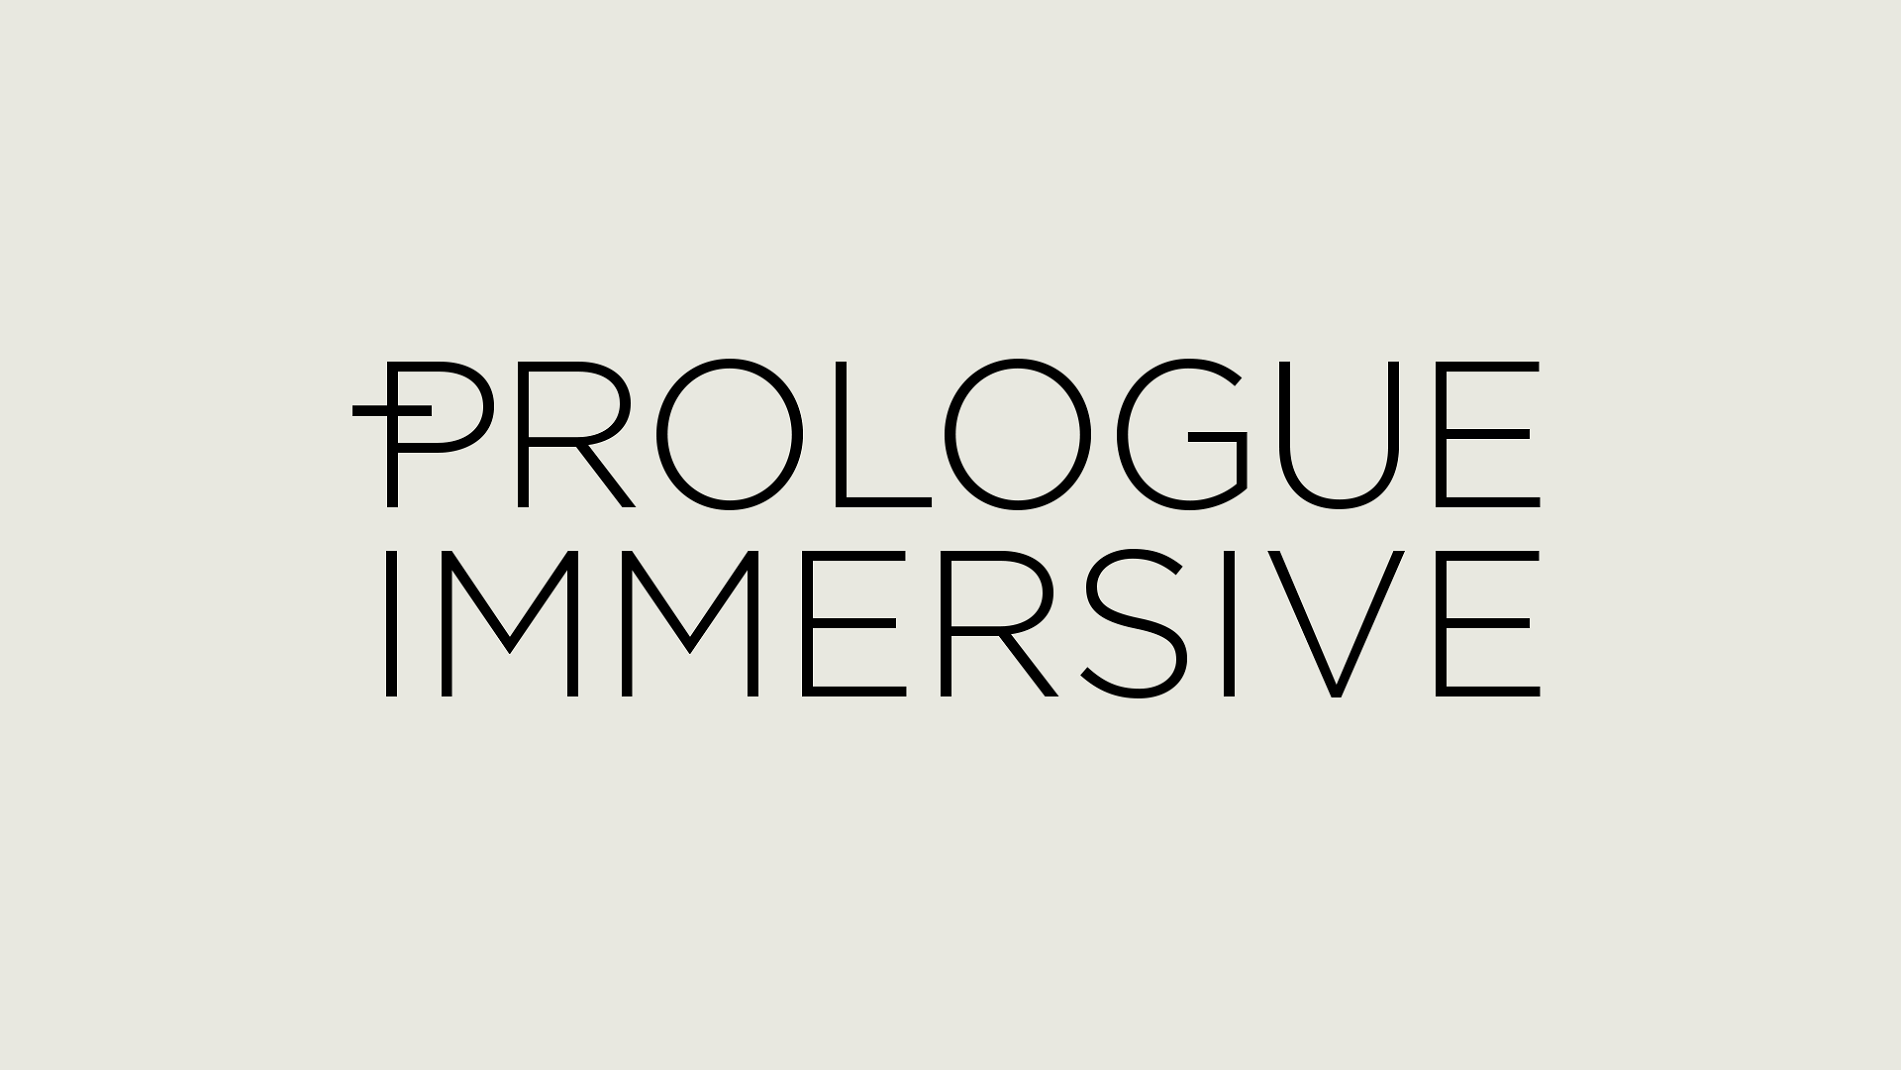 prologue immersive